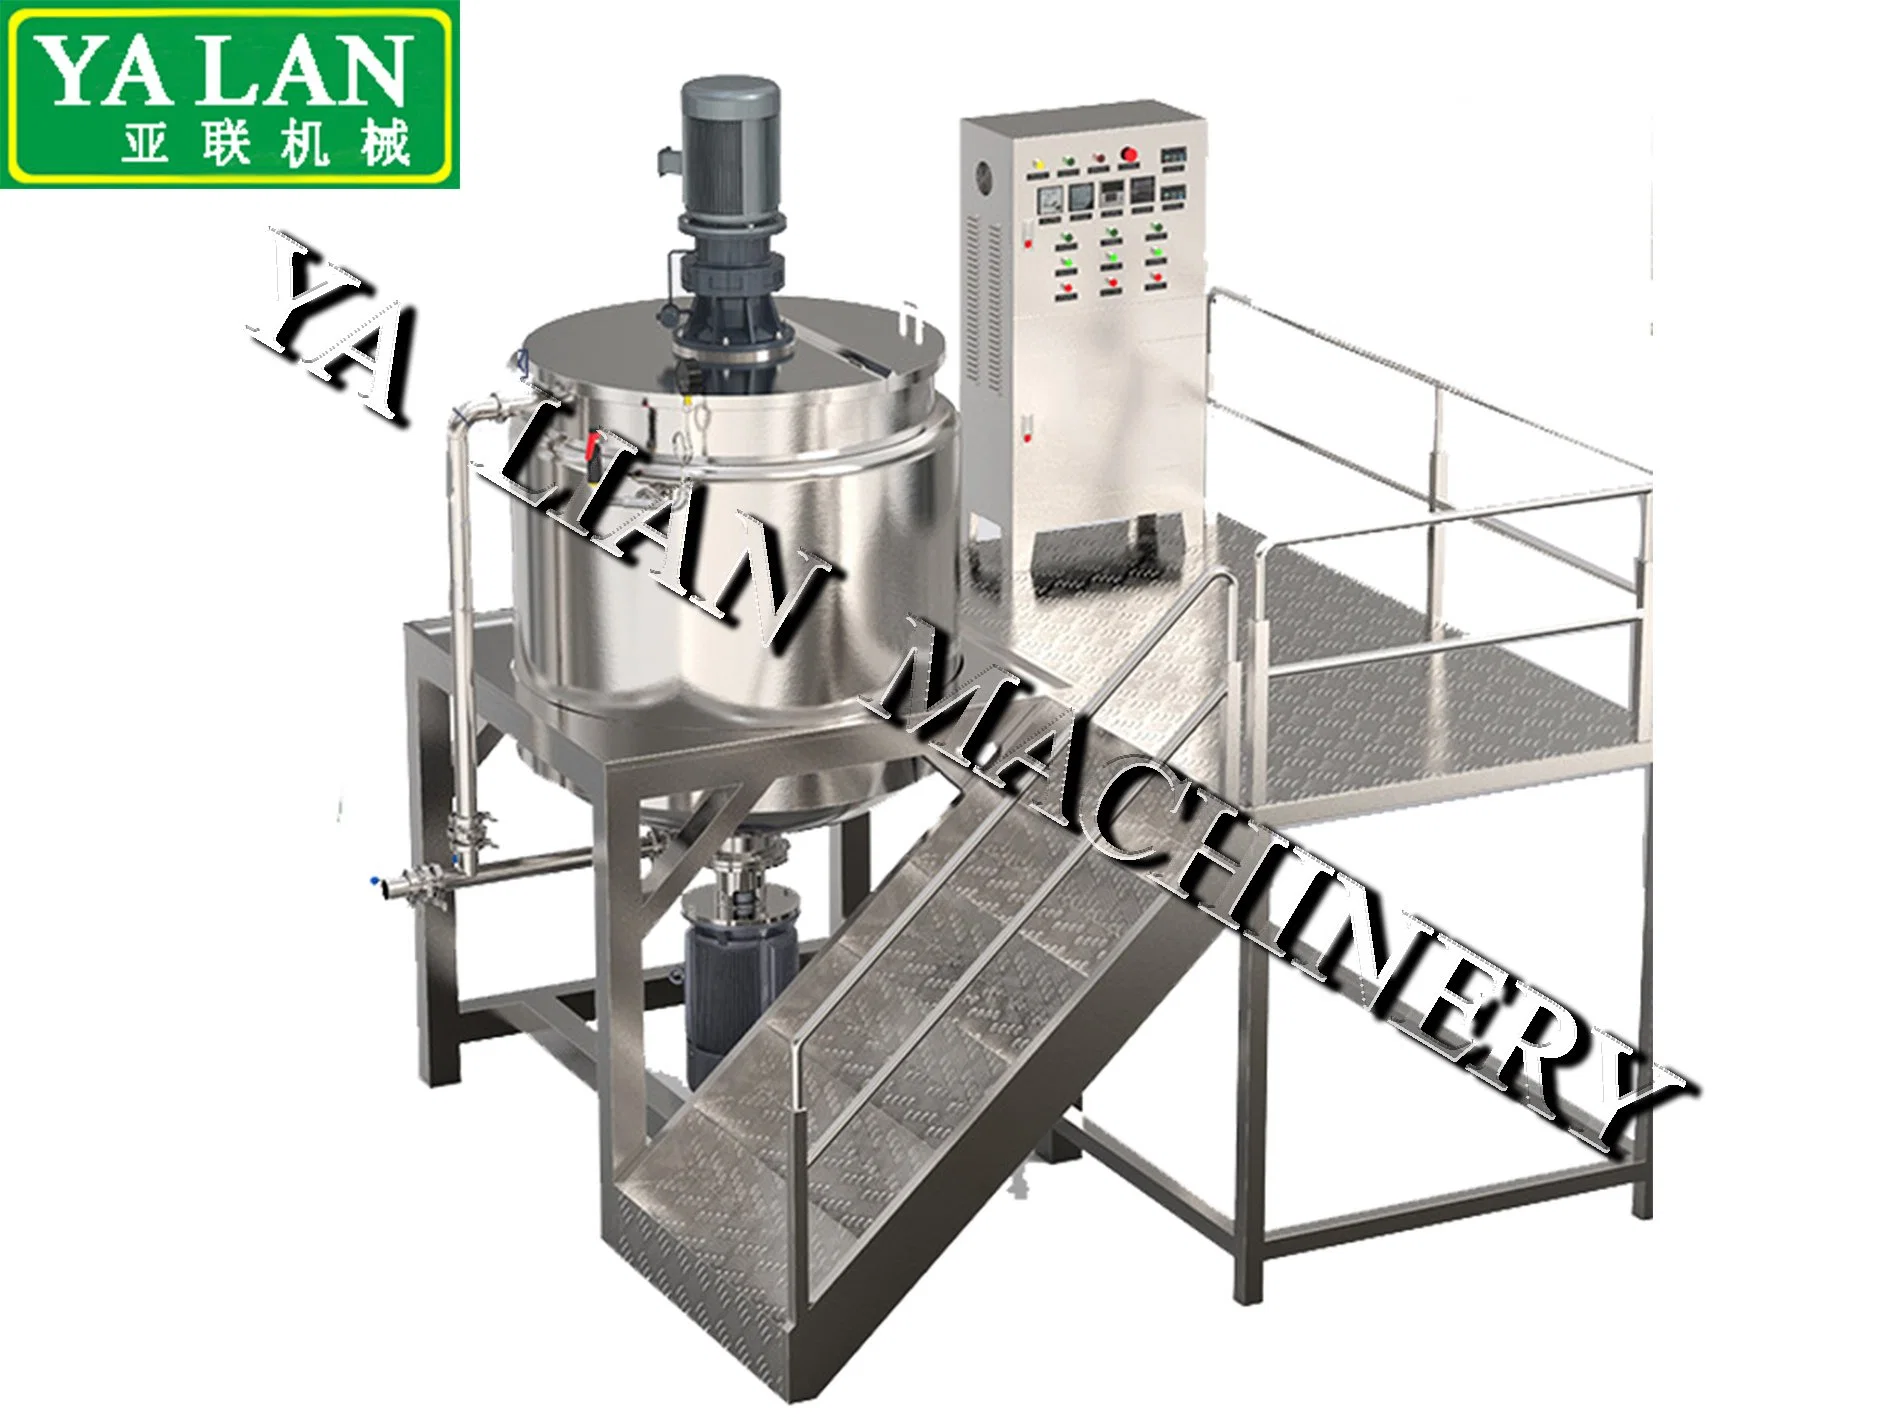 Fully Automatic High Pressure Homogenizer Mixer Alcohol Gel Hand Sanitizer Liquid Soap Making Machine Price